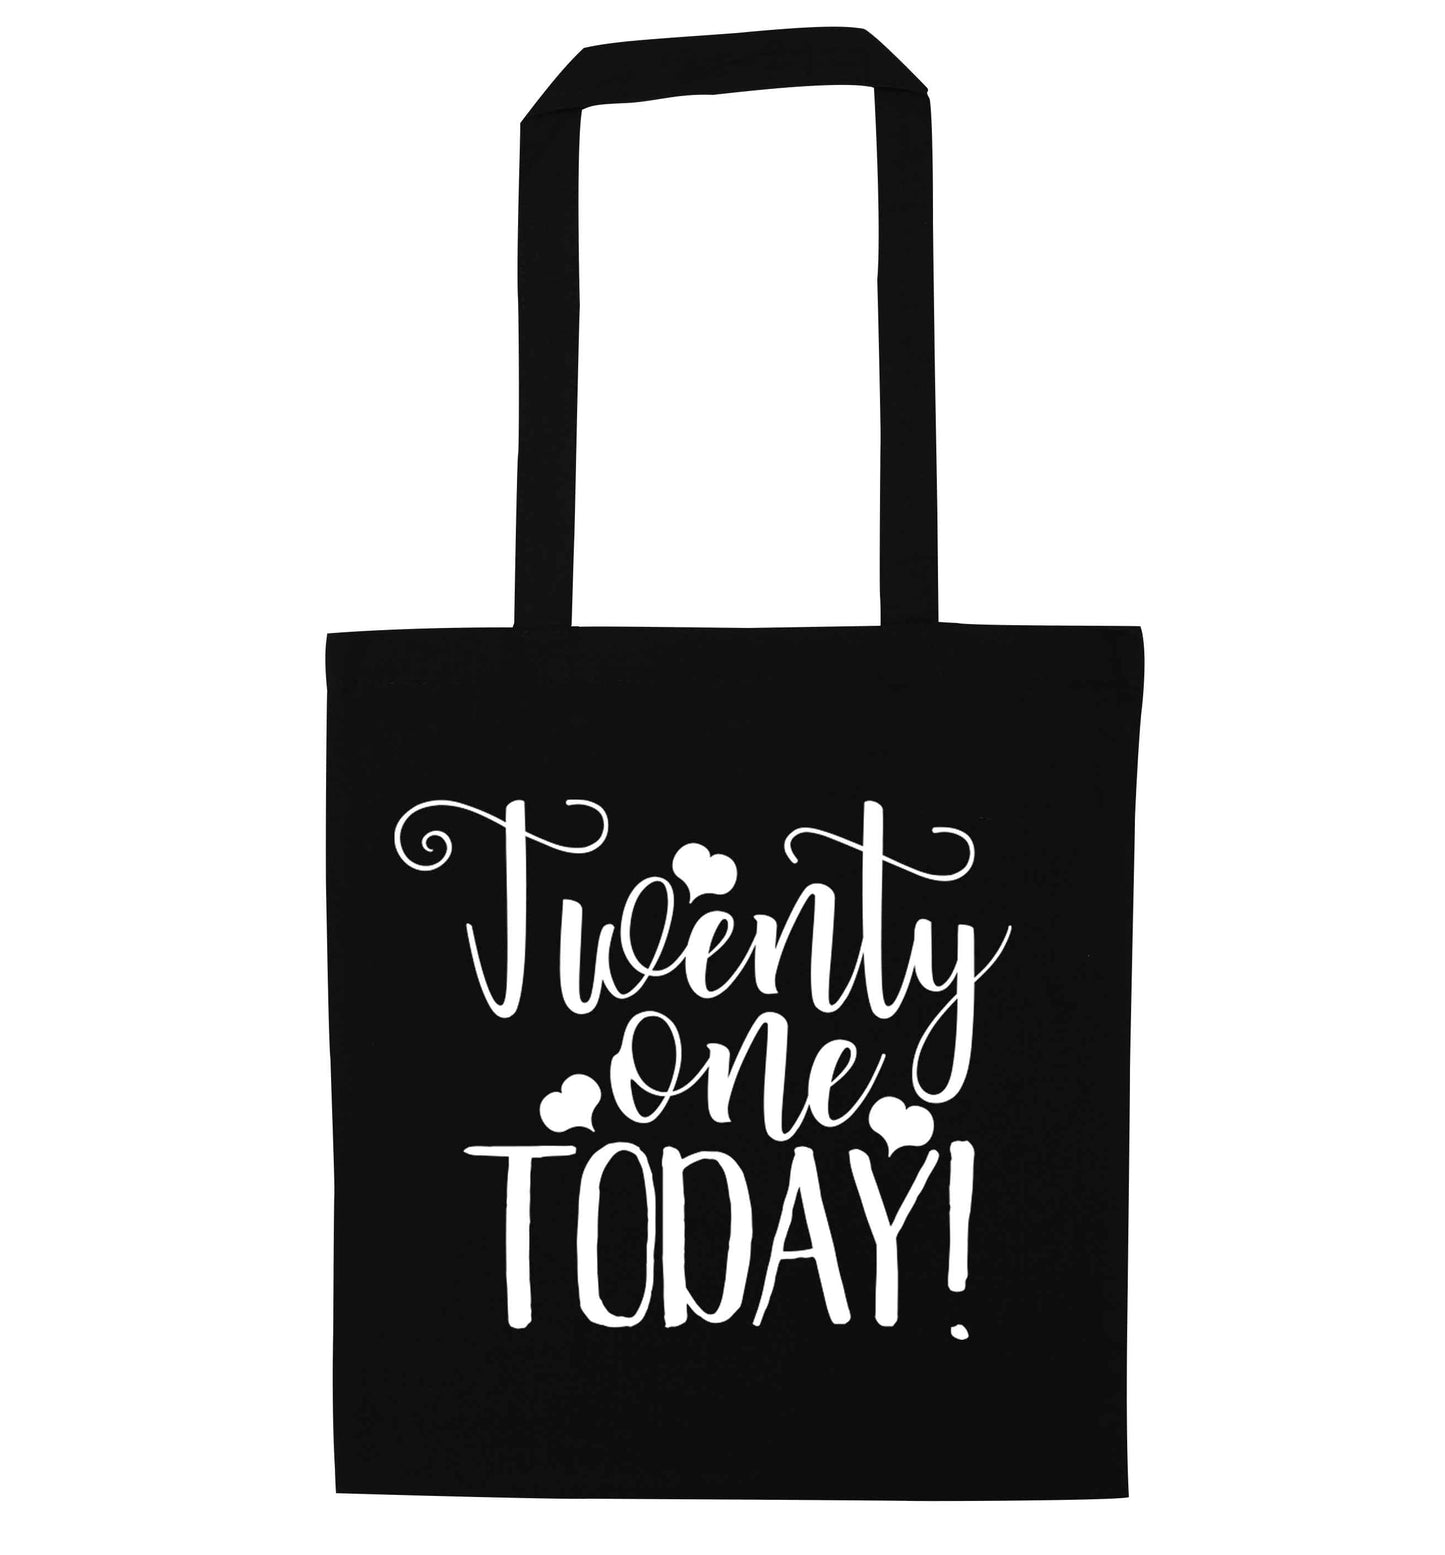 Twenty one today!black tote bag